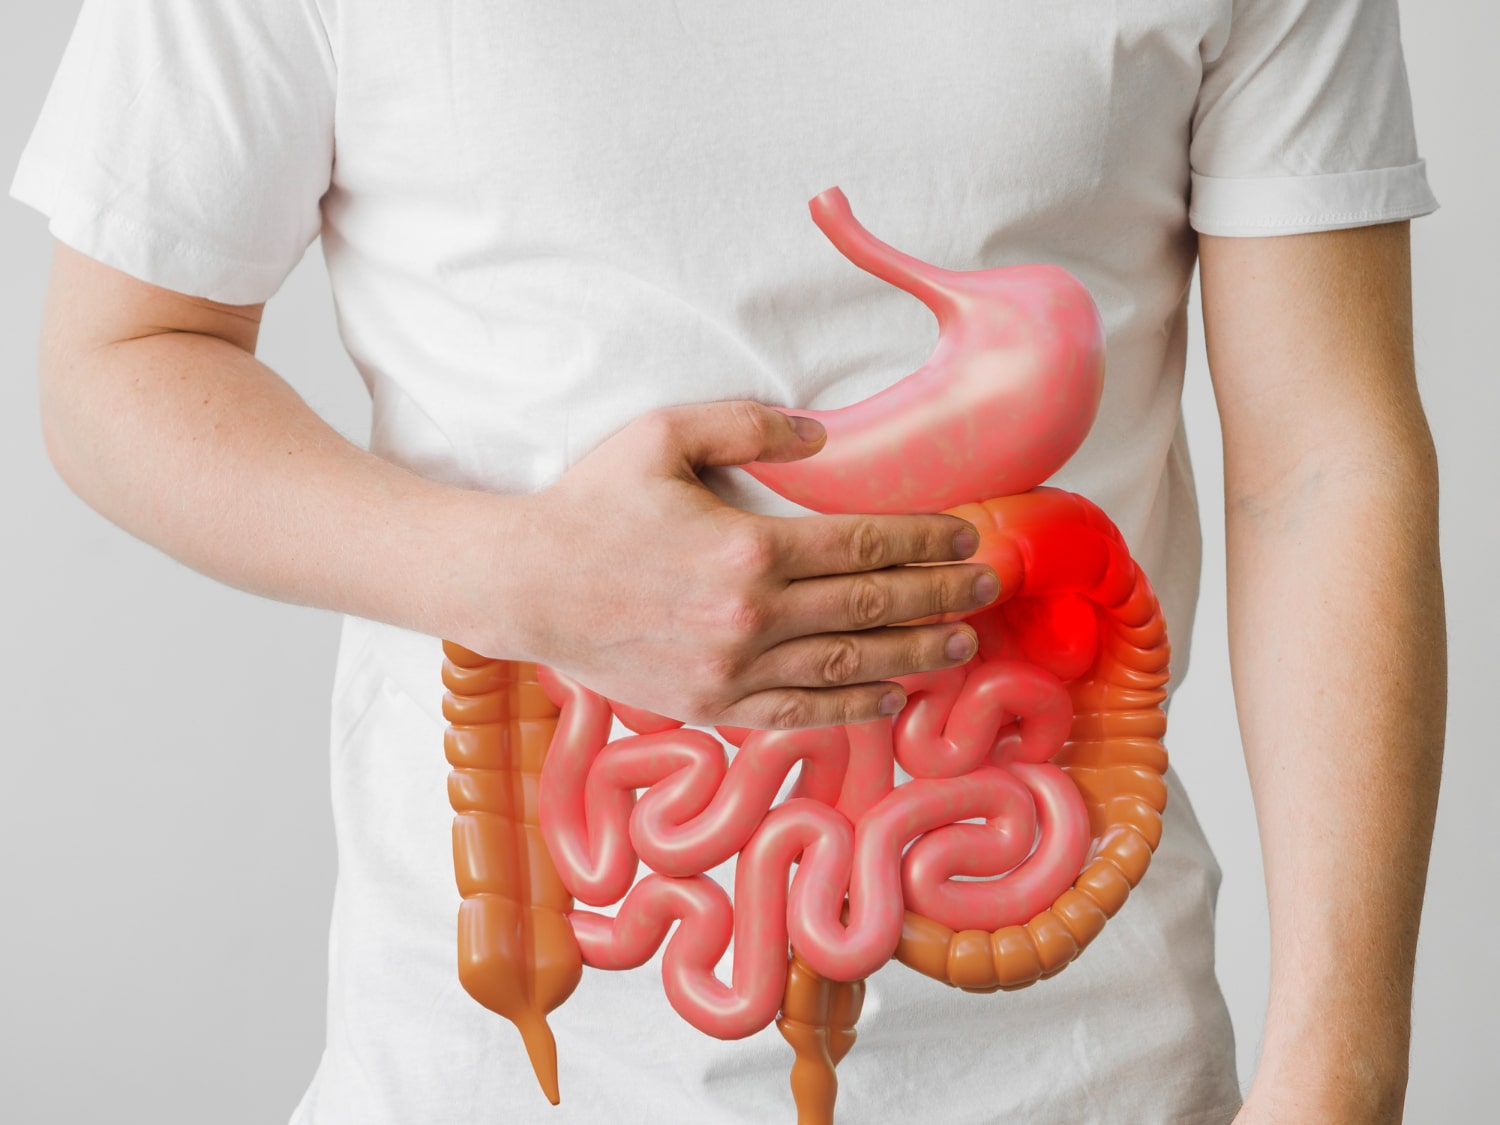 Medical Aid Plans that Cover Crohn’s Disease